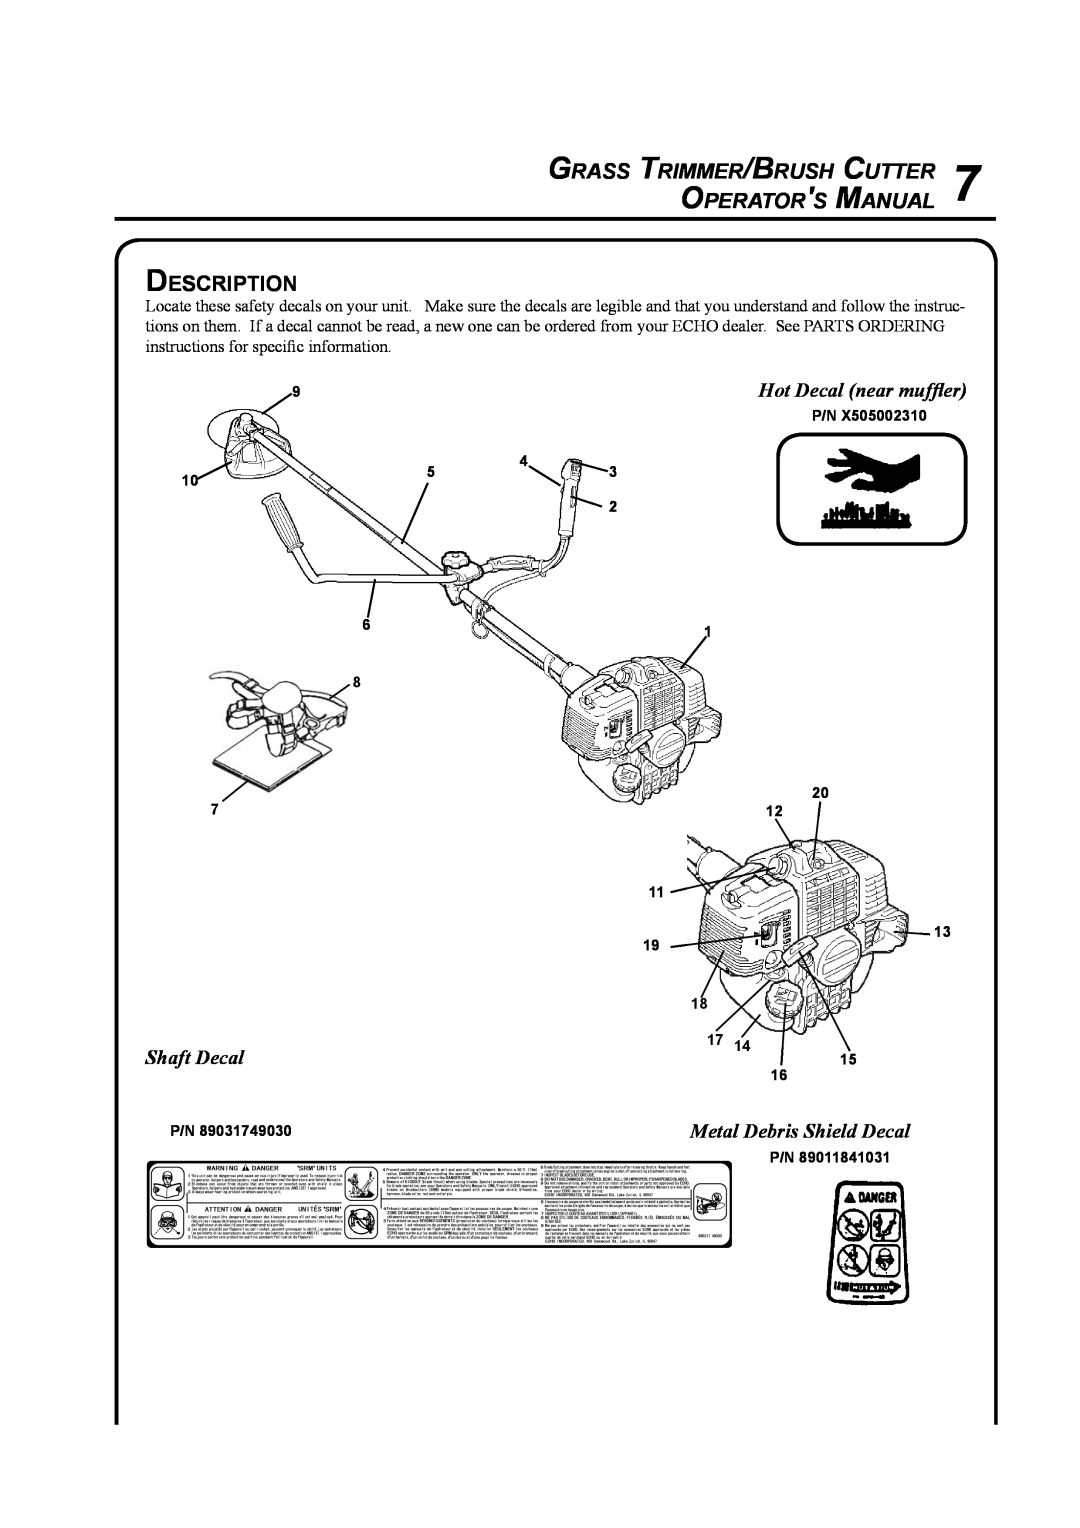 Echo SRM-410U Description, Hot Decal near mufﬂer, Metal Debris Shield Decal, Grass Trimmer/Brush Cutter Operators Manual 